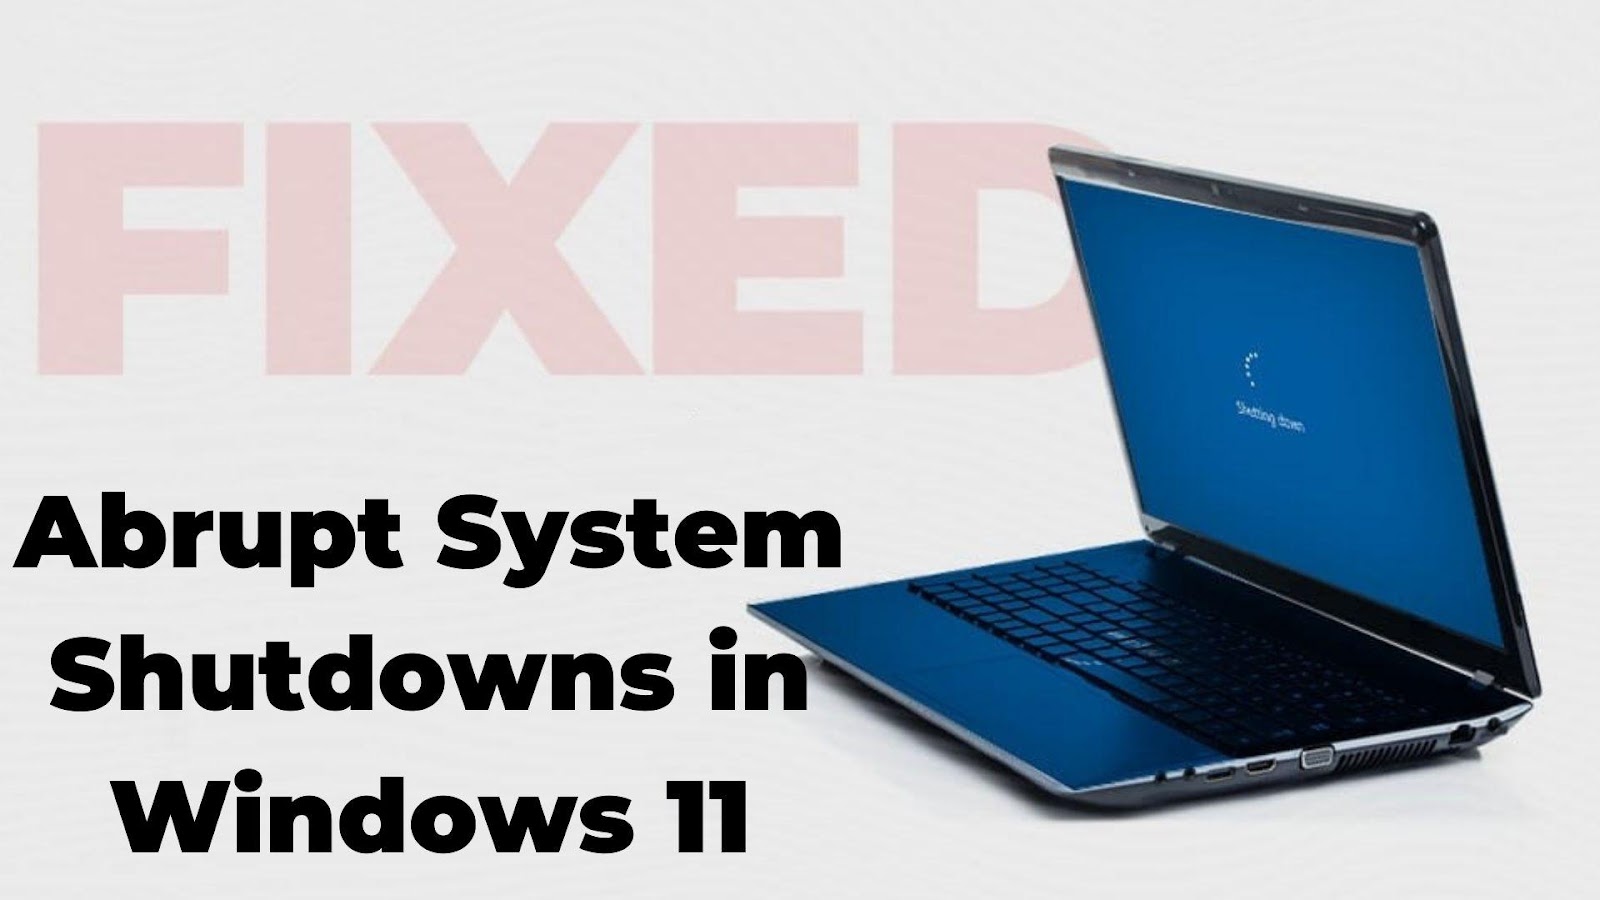 Shutdowns in Windows 11